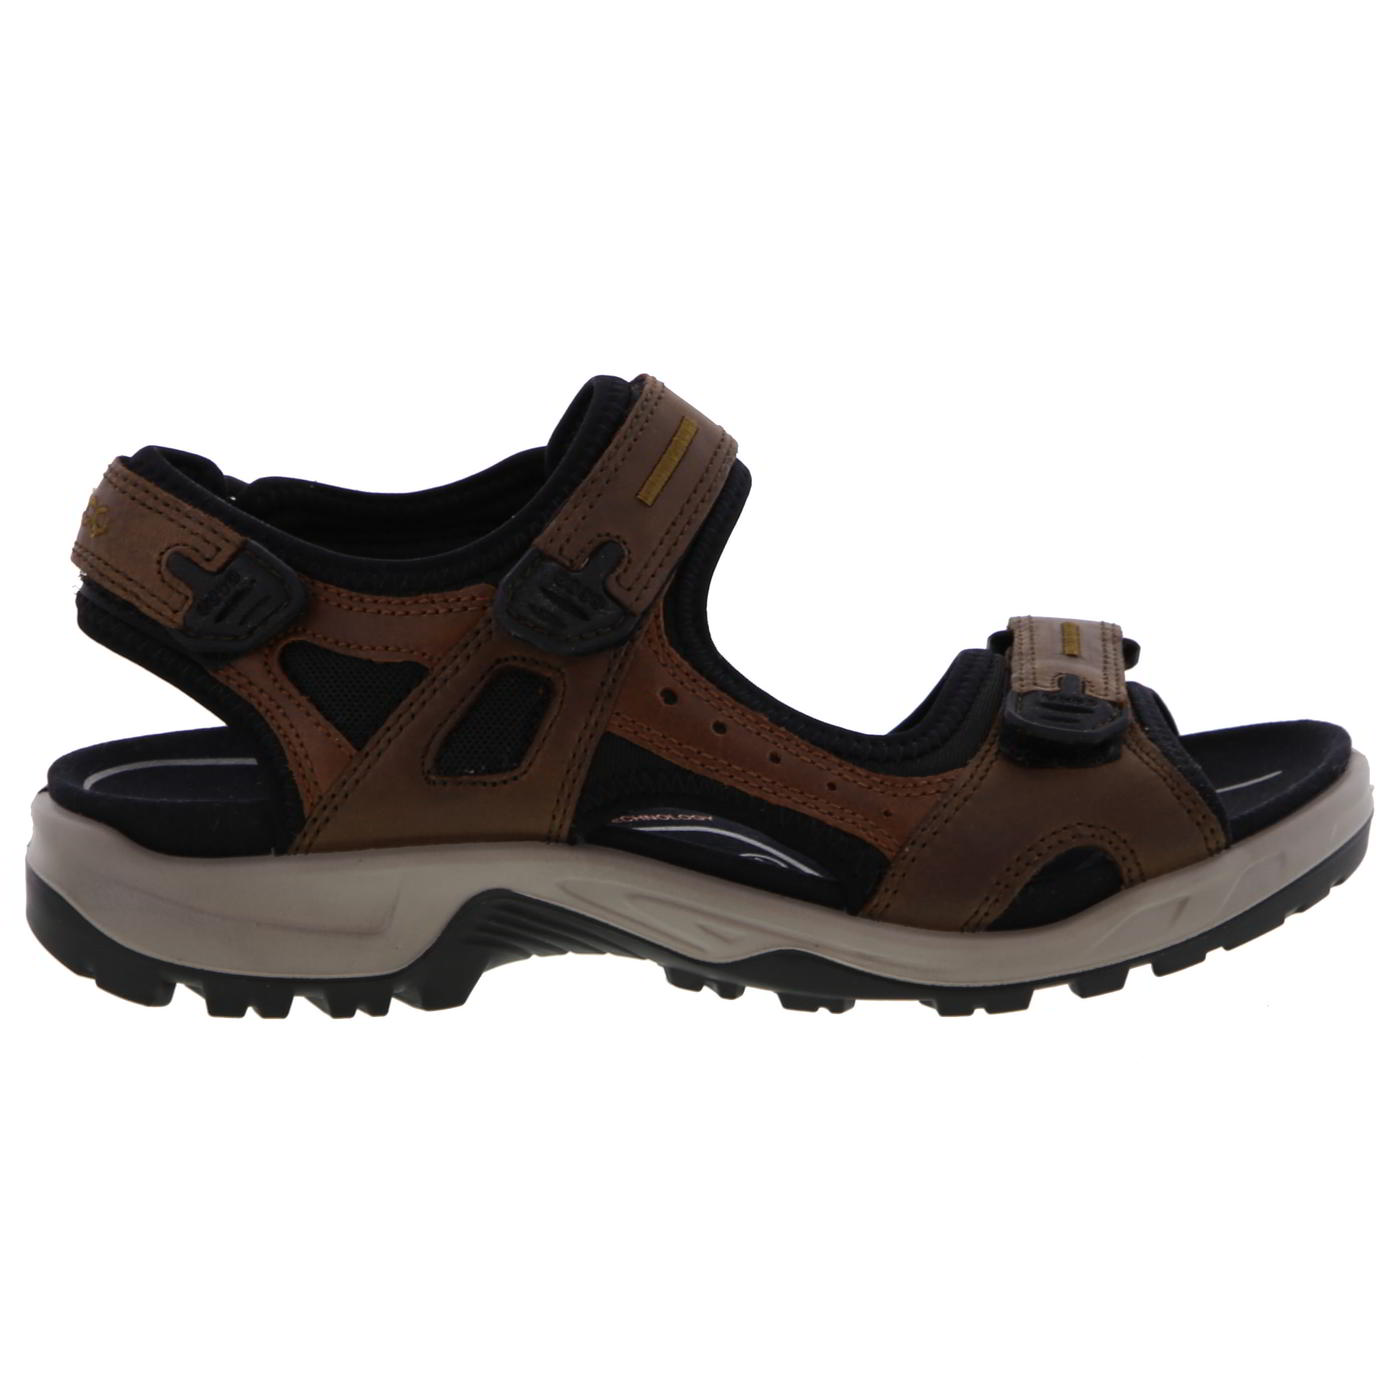 Ecco Shoes Mens Offroad Leather Walking Sandals - Espresso Cocoa Brown Black 2951